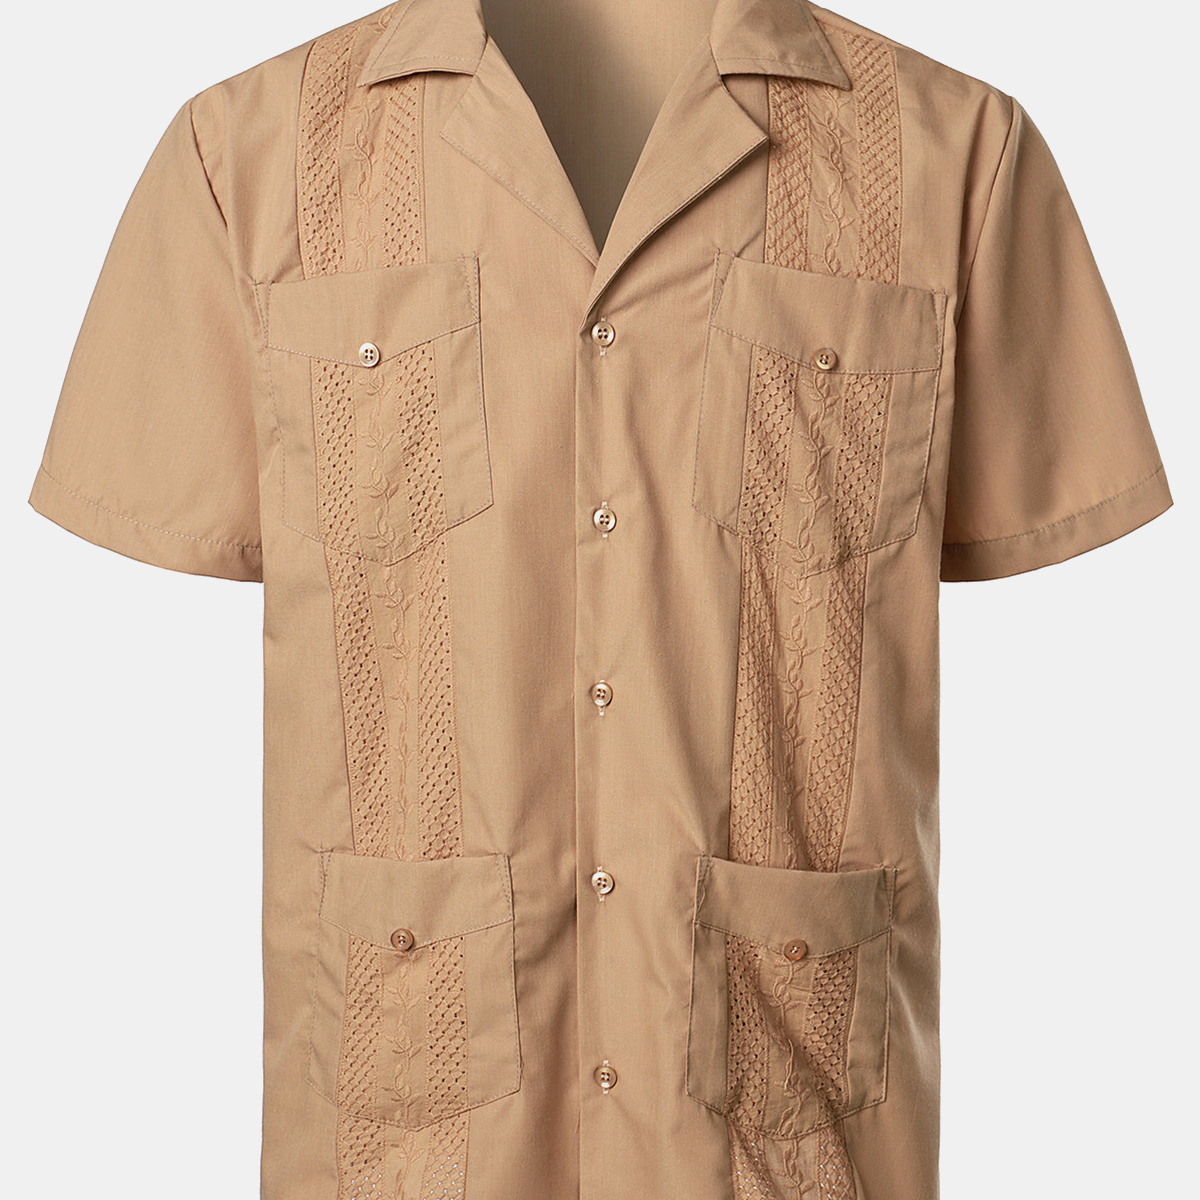 Men's Solid Color Cuban Collar Tropical Hawaiian Cotton Shirt